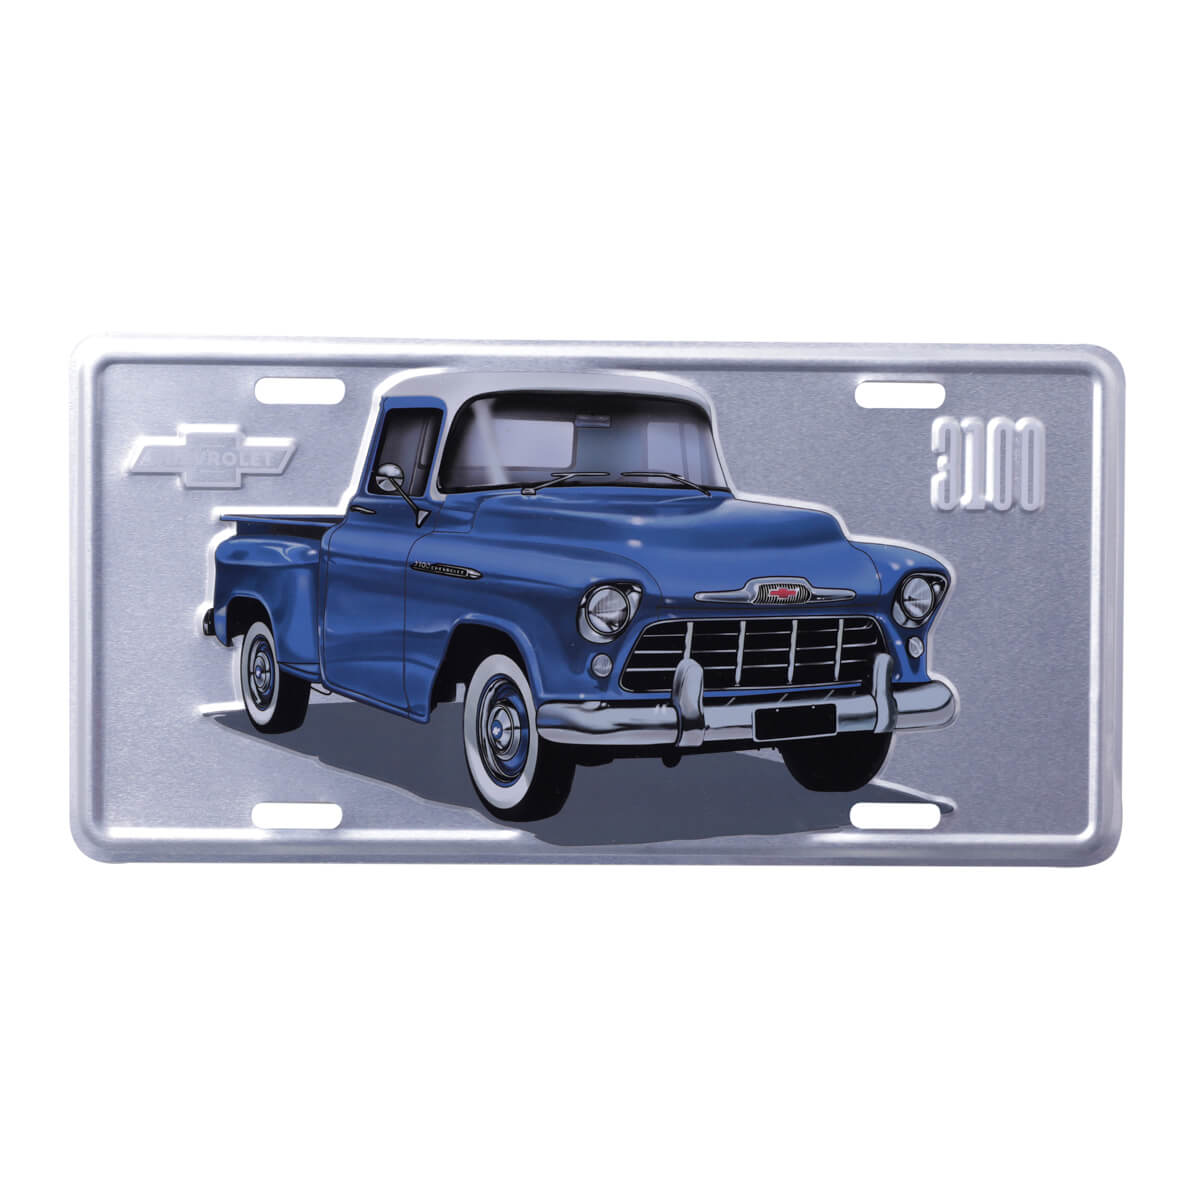 Placa de Alumínio Chevrolet - Pick up 3100 - Prata / Azul